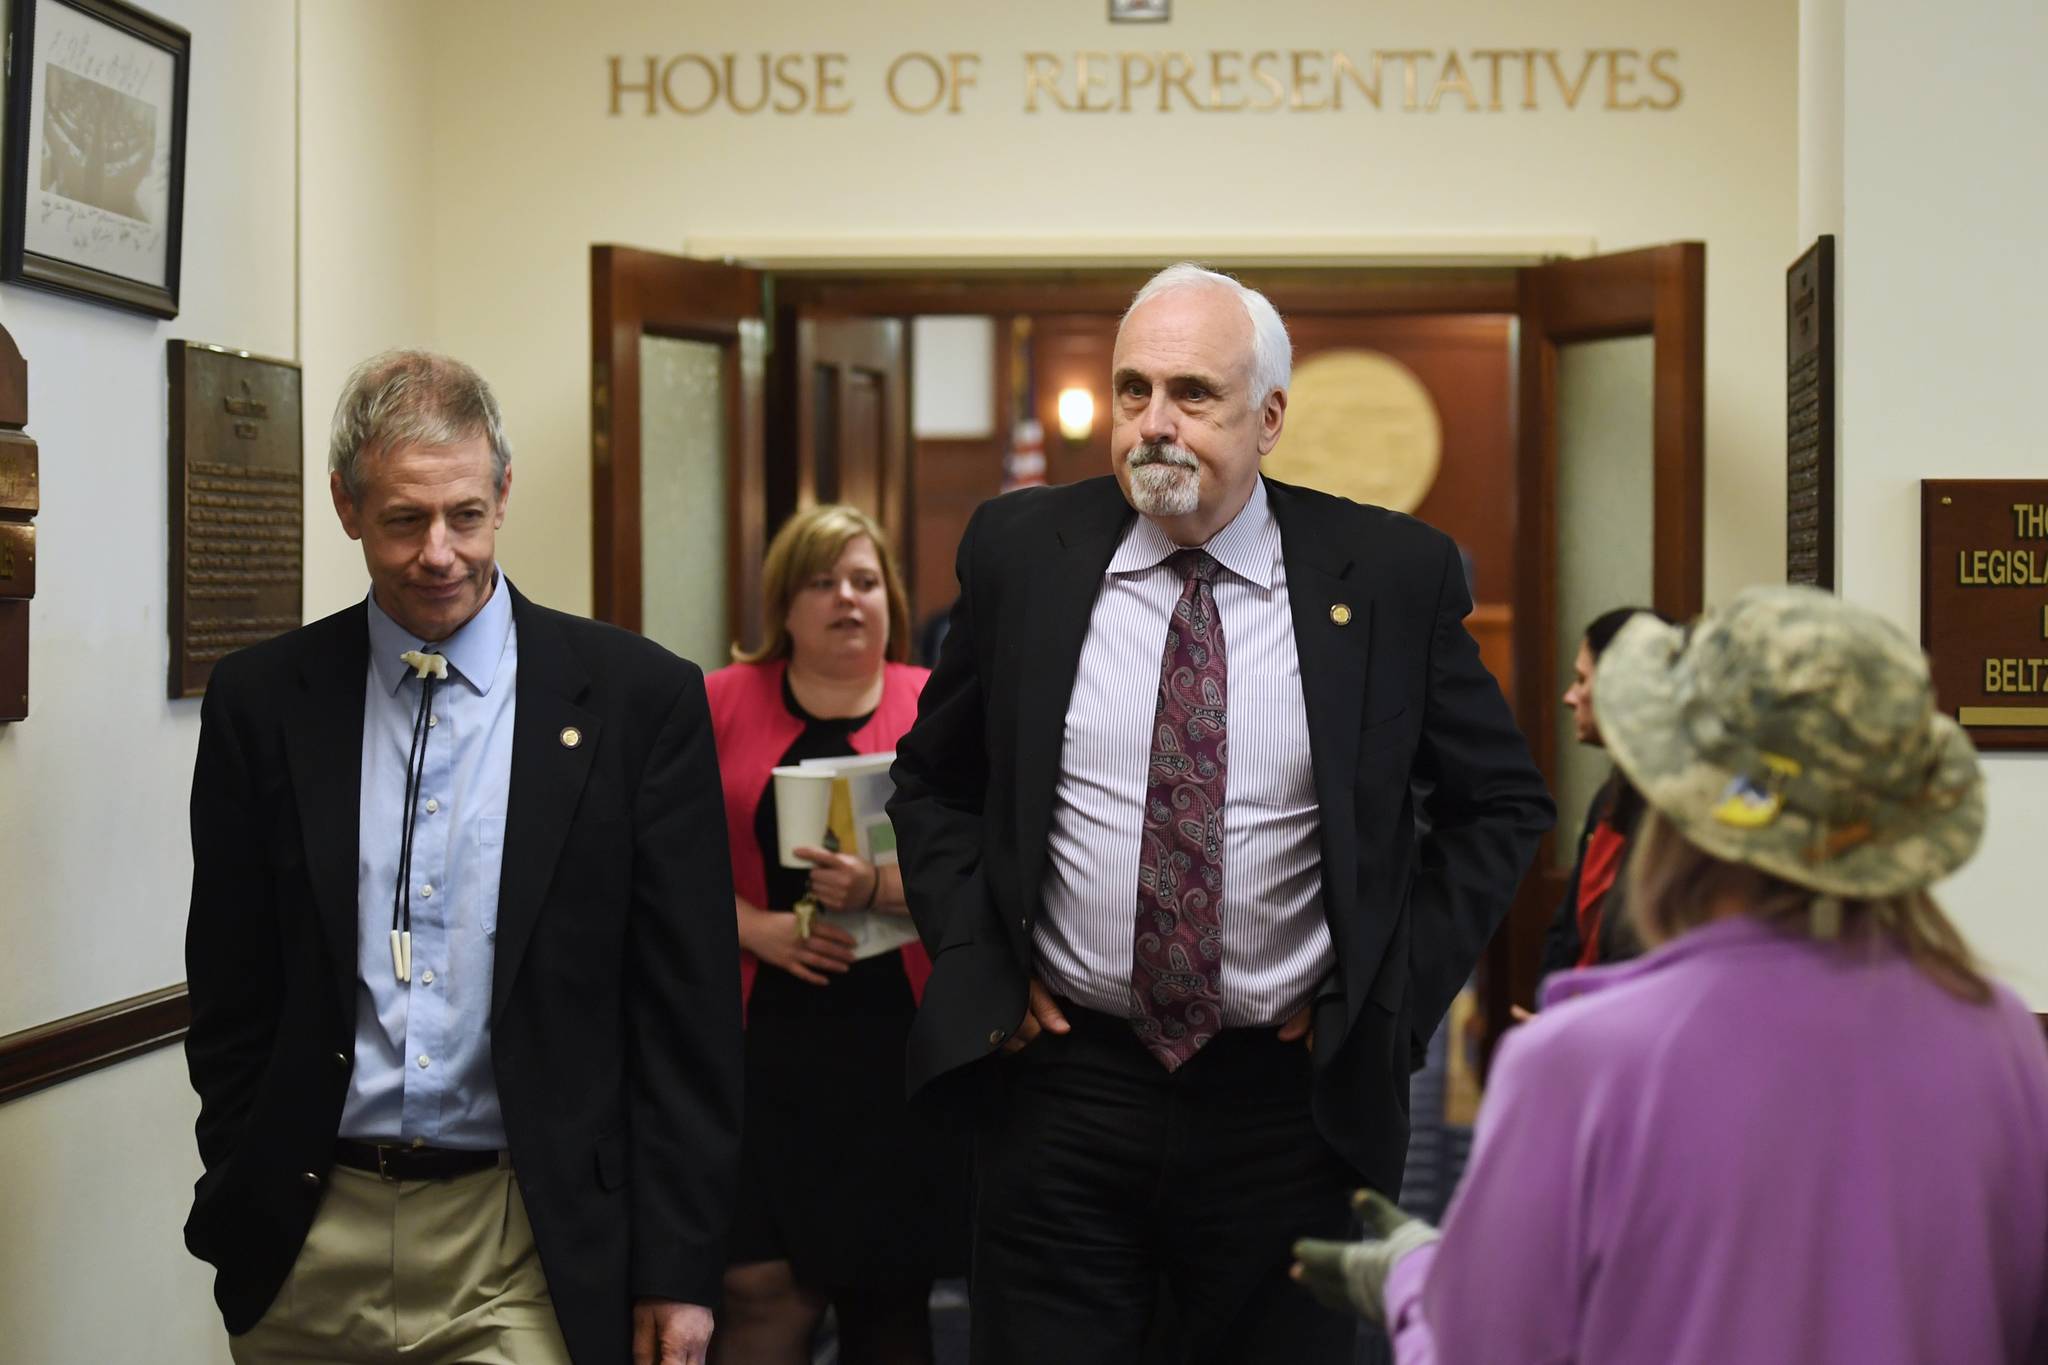 Representatives walk out of the House after adjournment on Thursday, June 13, 2019. (Michael Penn | Juneau Empire)